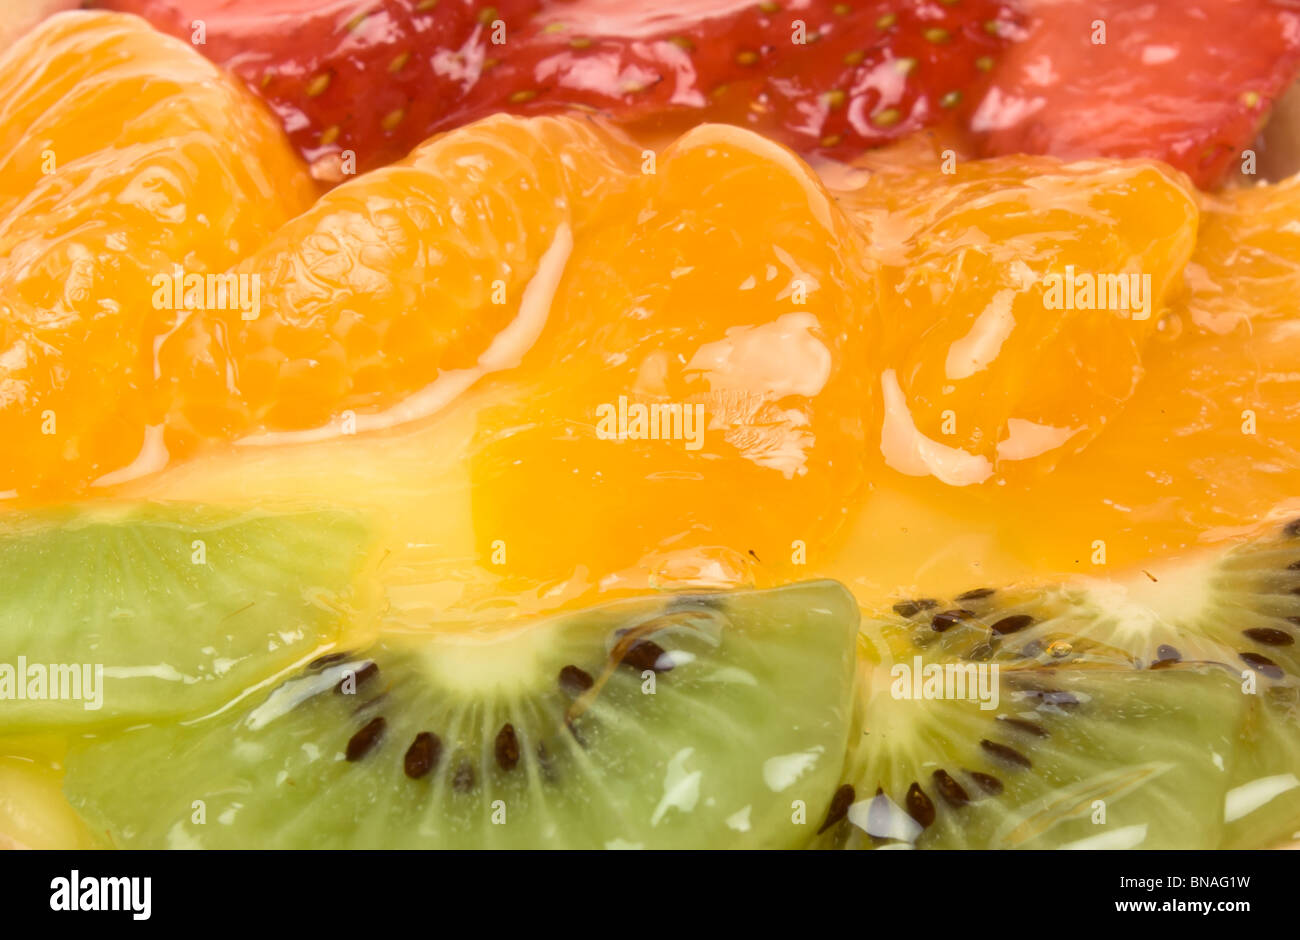 Custard filled tart topped with summer fruits of Strawberry, mandarin orange and kiwi fruit. Stock Photo